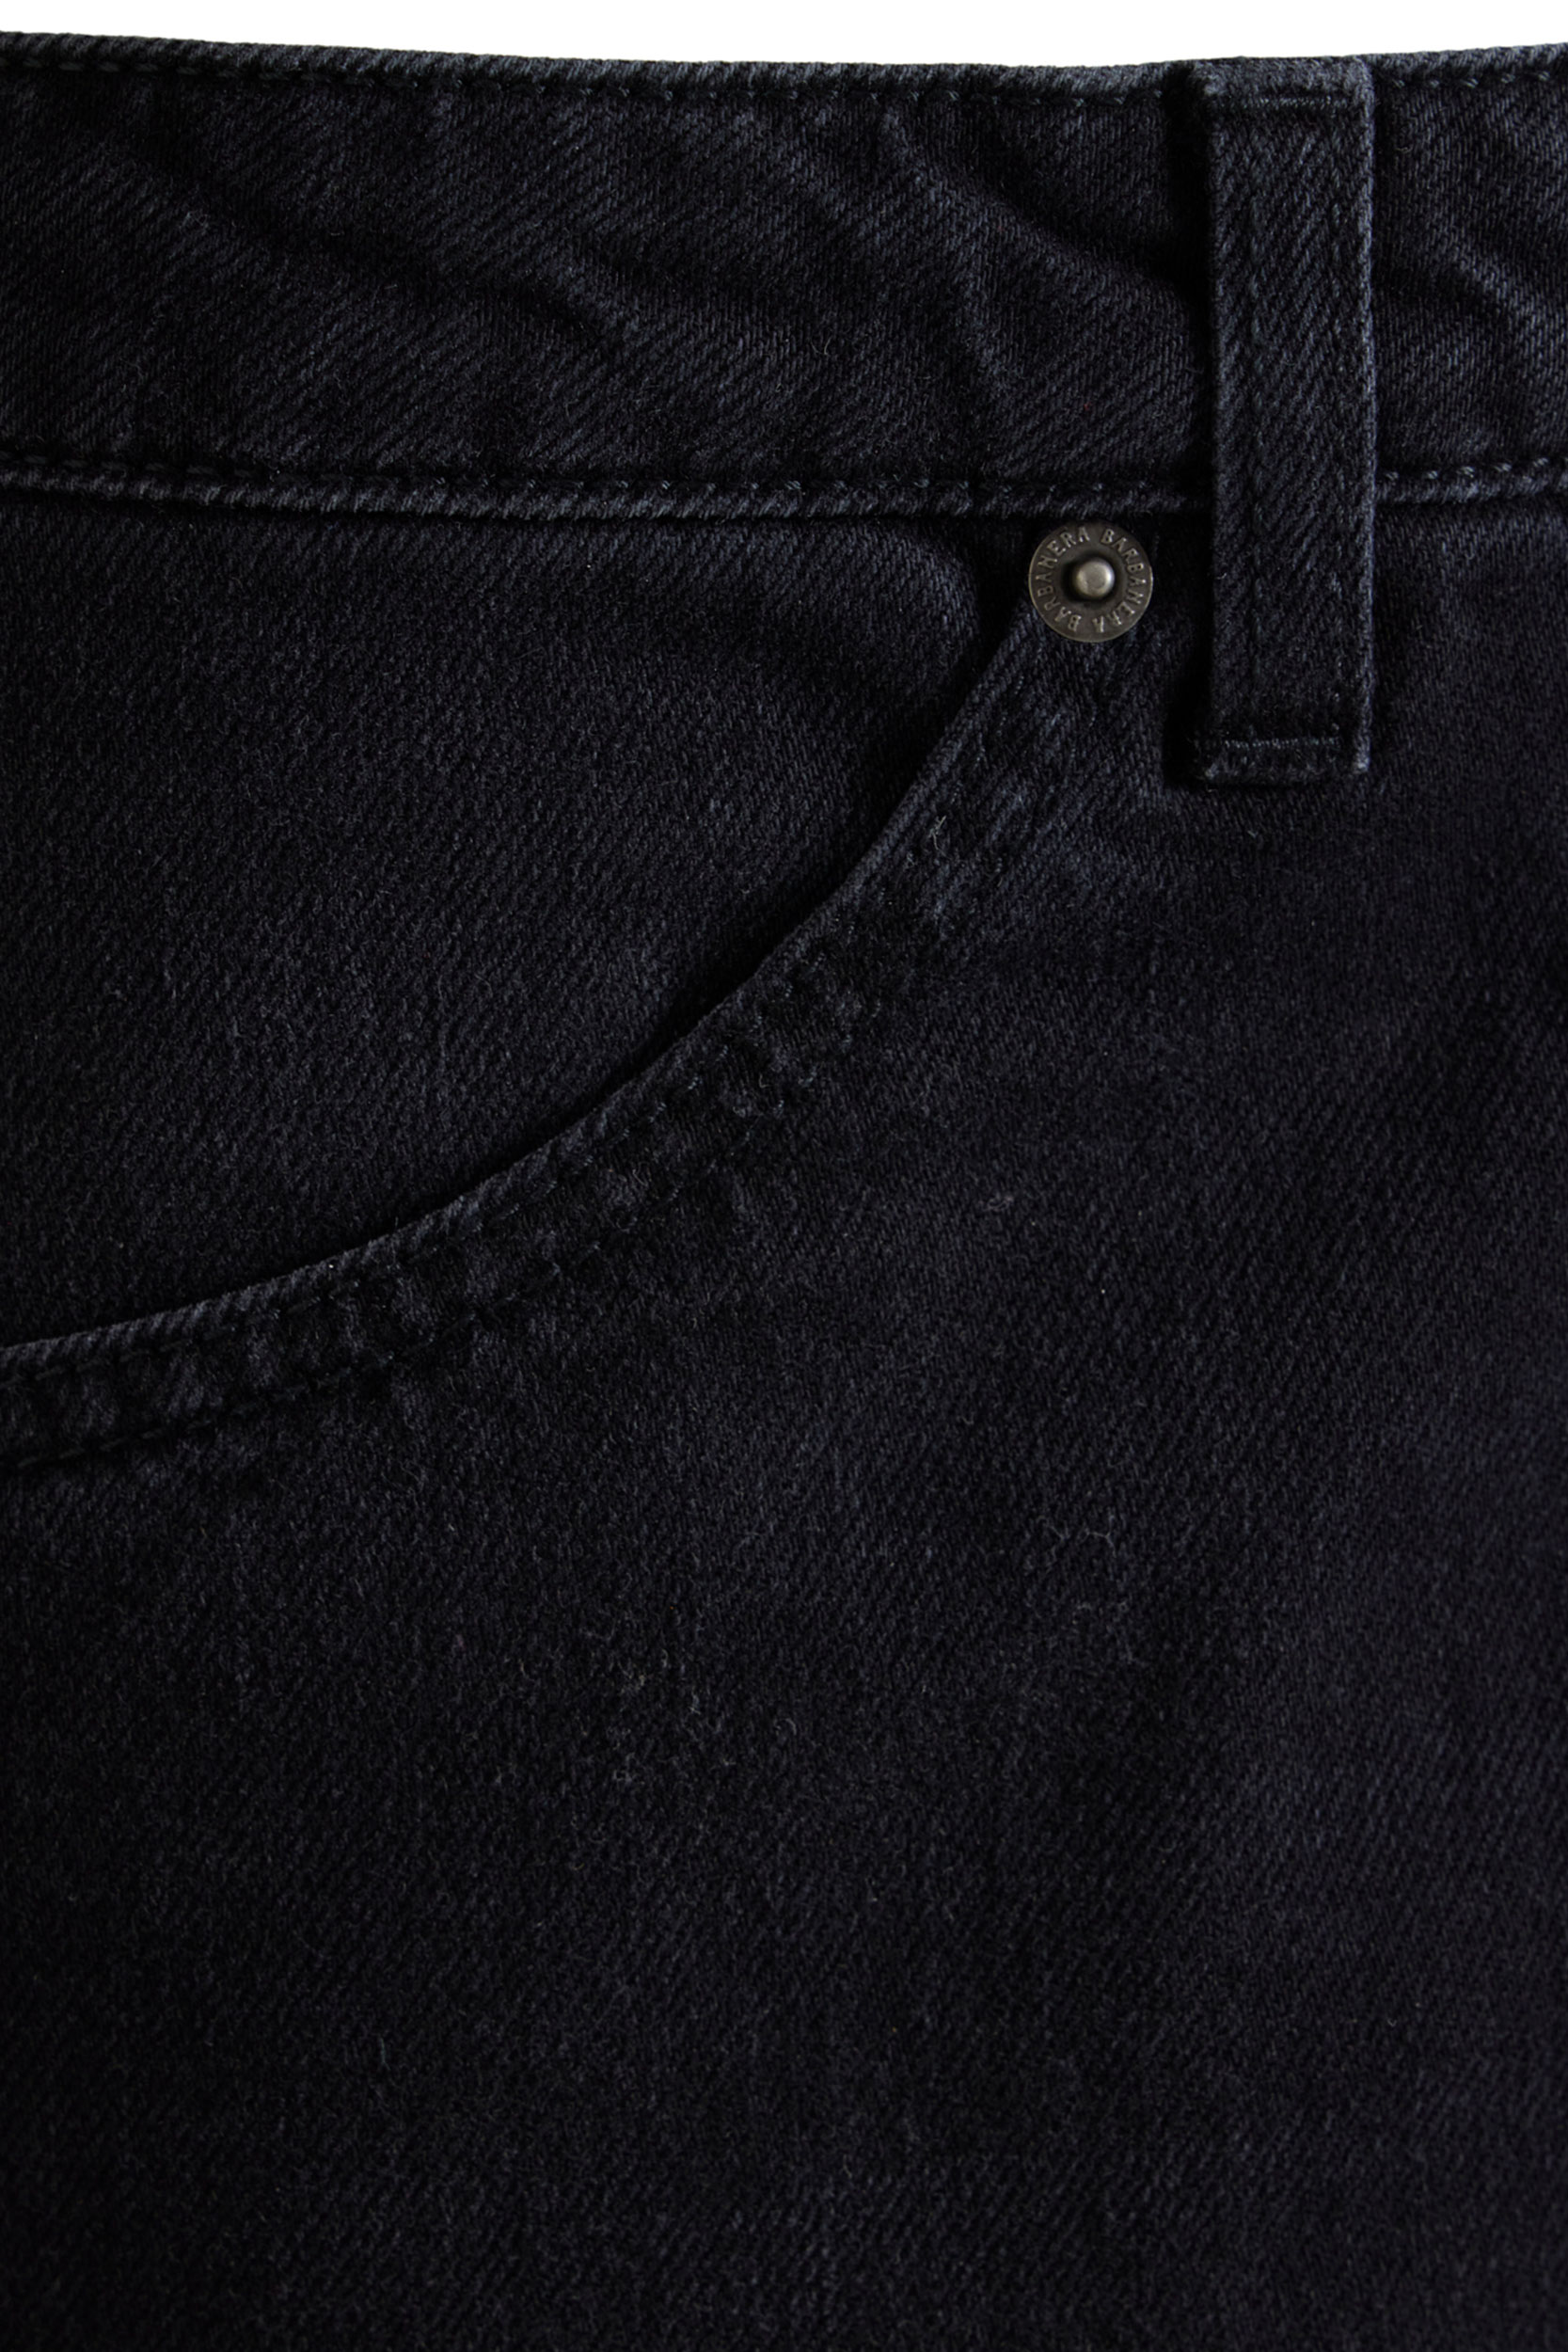 Wild Thing Black Coreva 100% Compostable Stretch Denim Fabric Straight ...